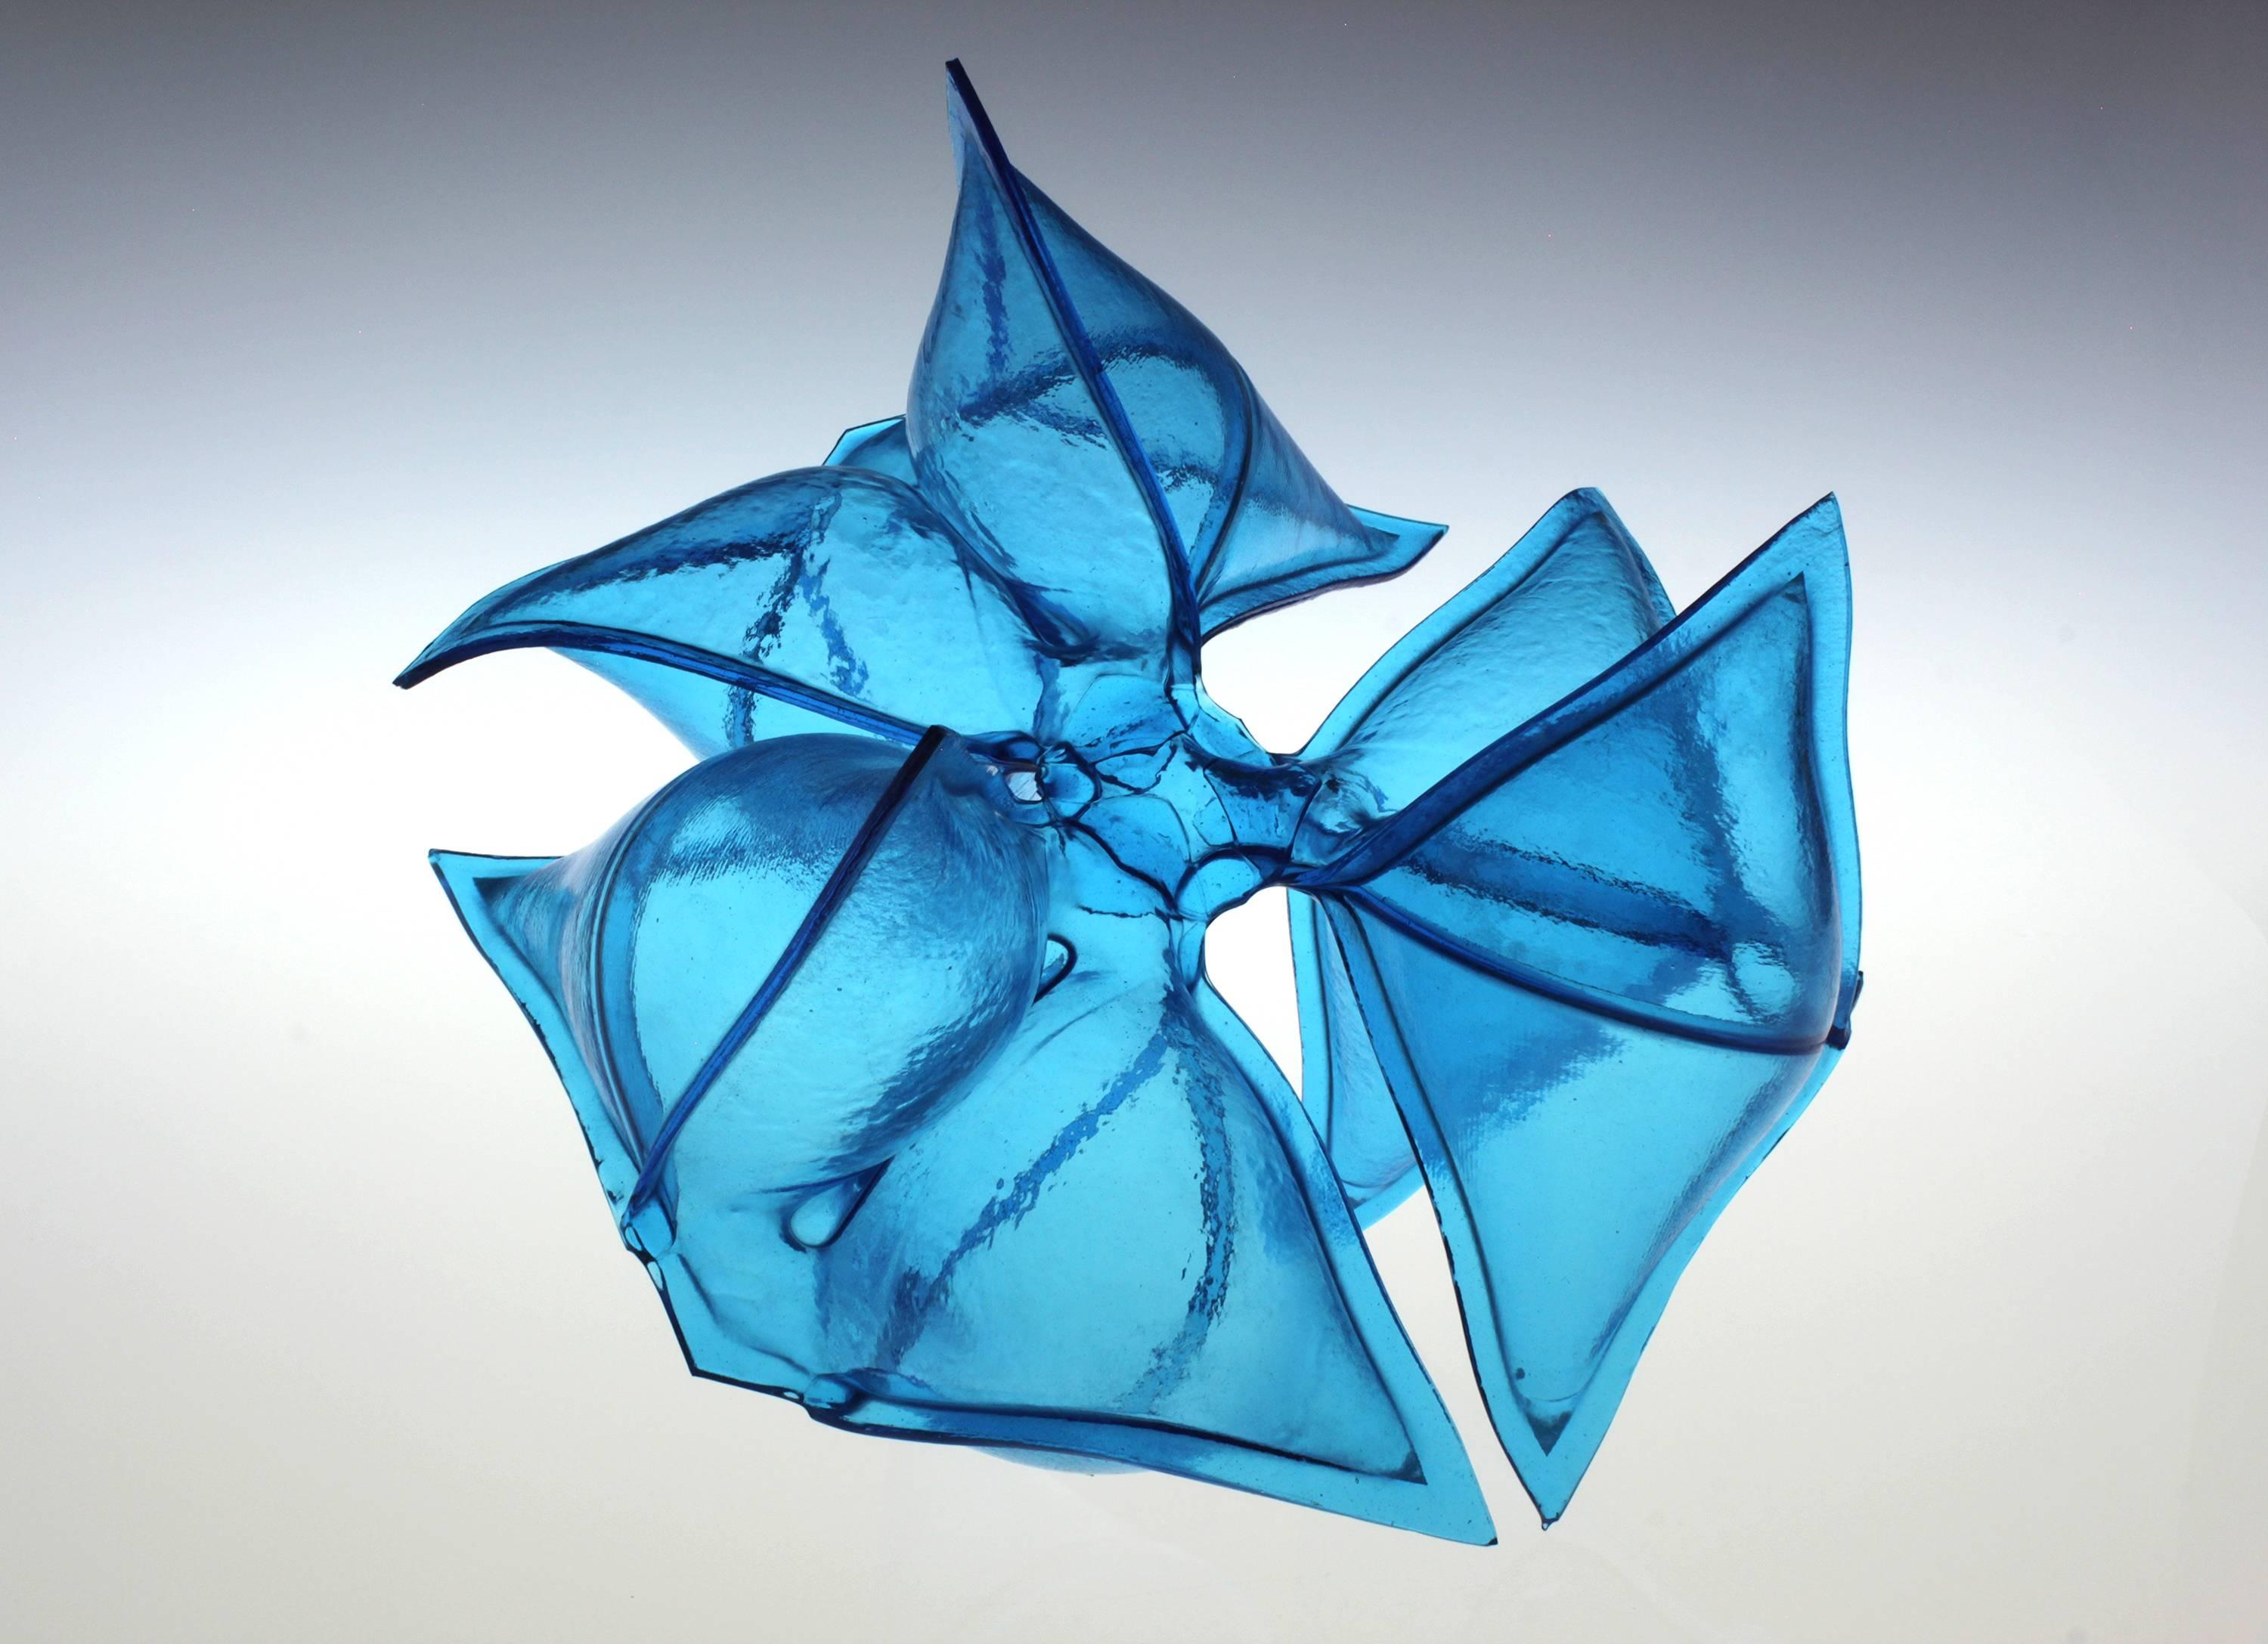  Matthew Szösz, untitled (inflatable) no. 85b, 2018, glass - Sculpture by Matthew Szosz